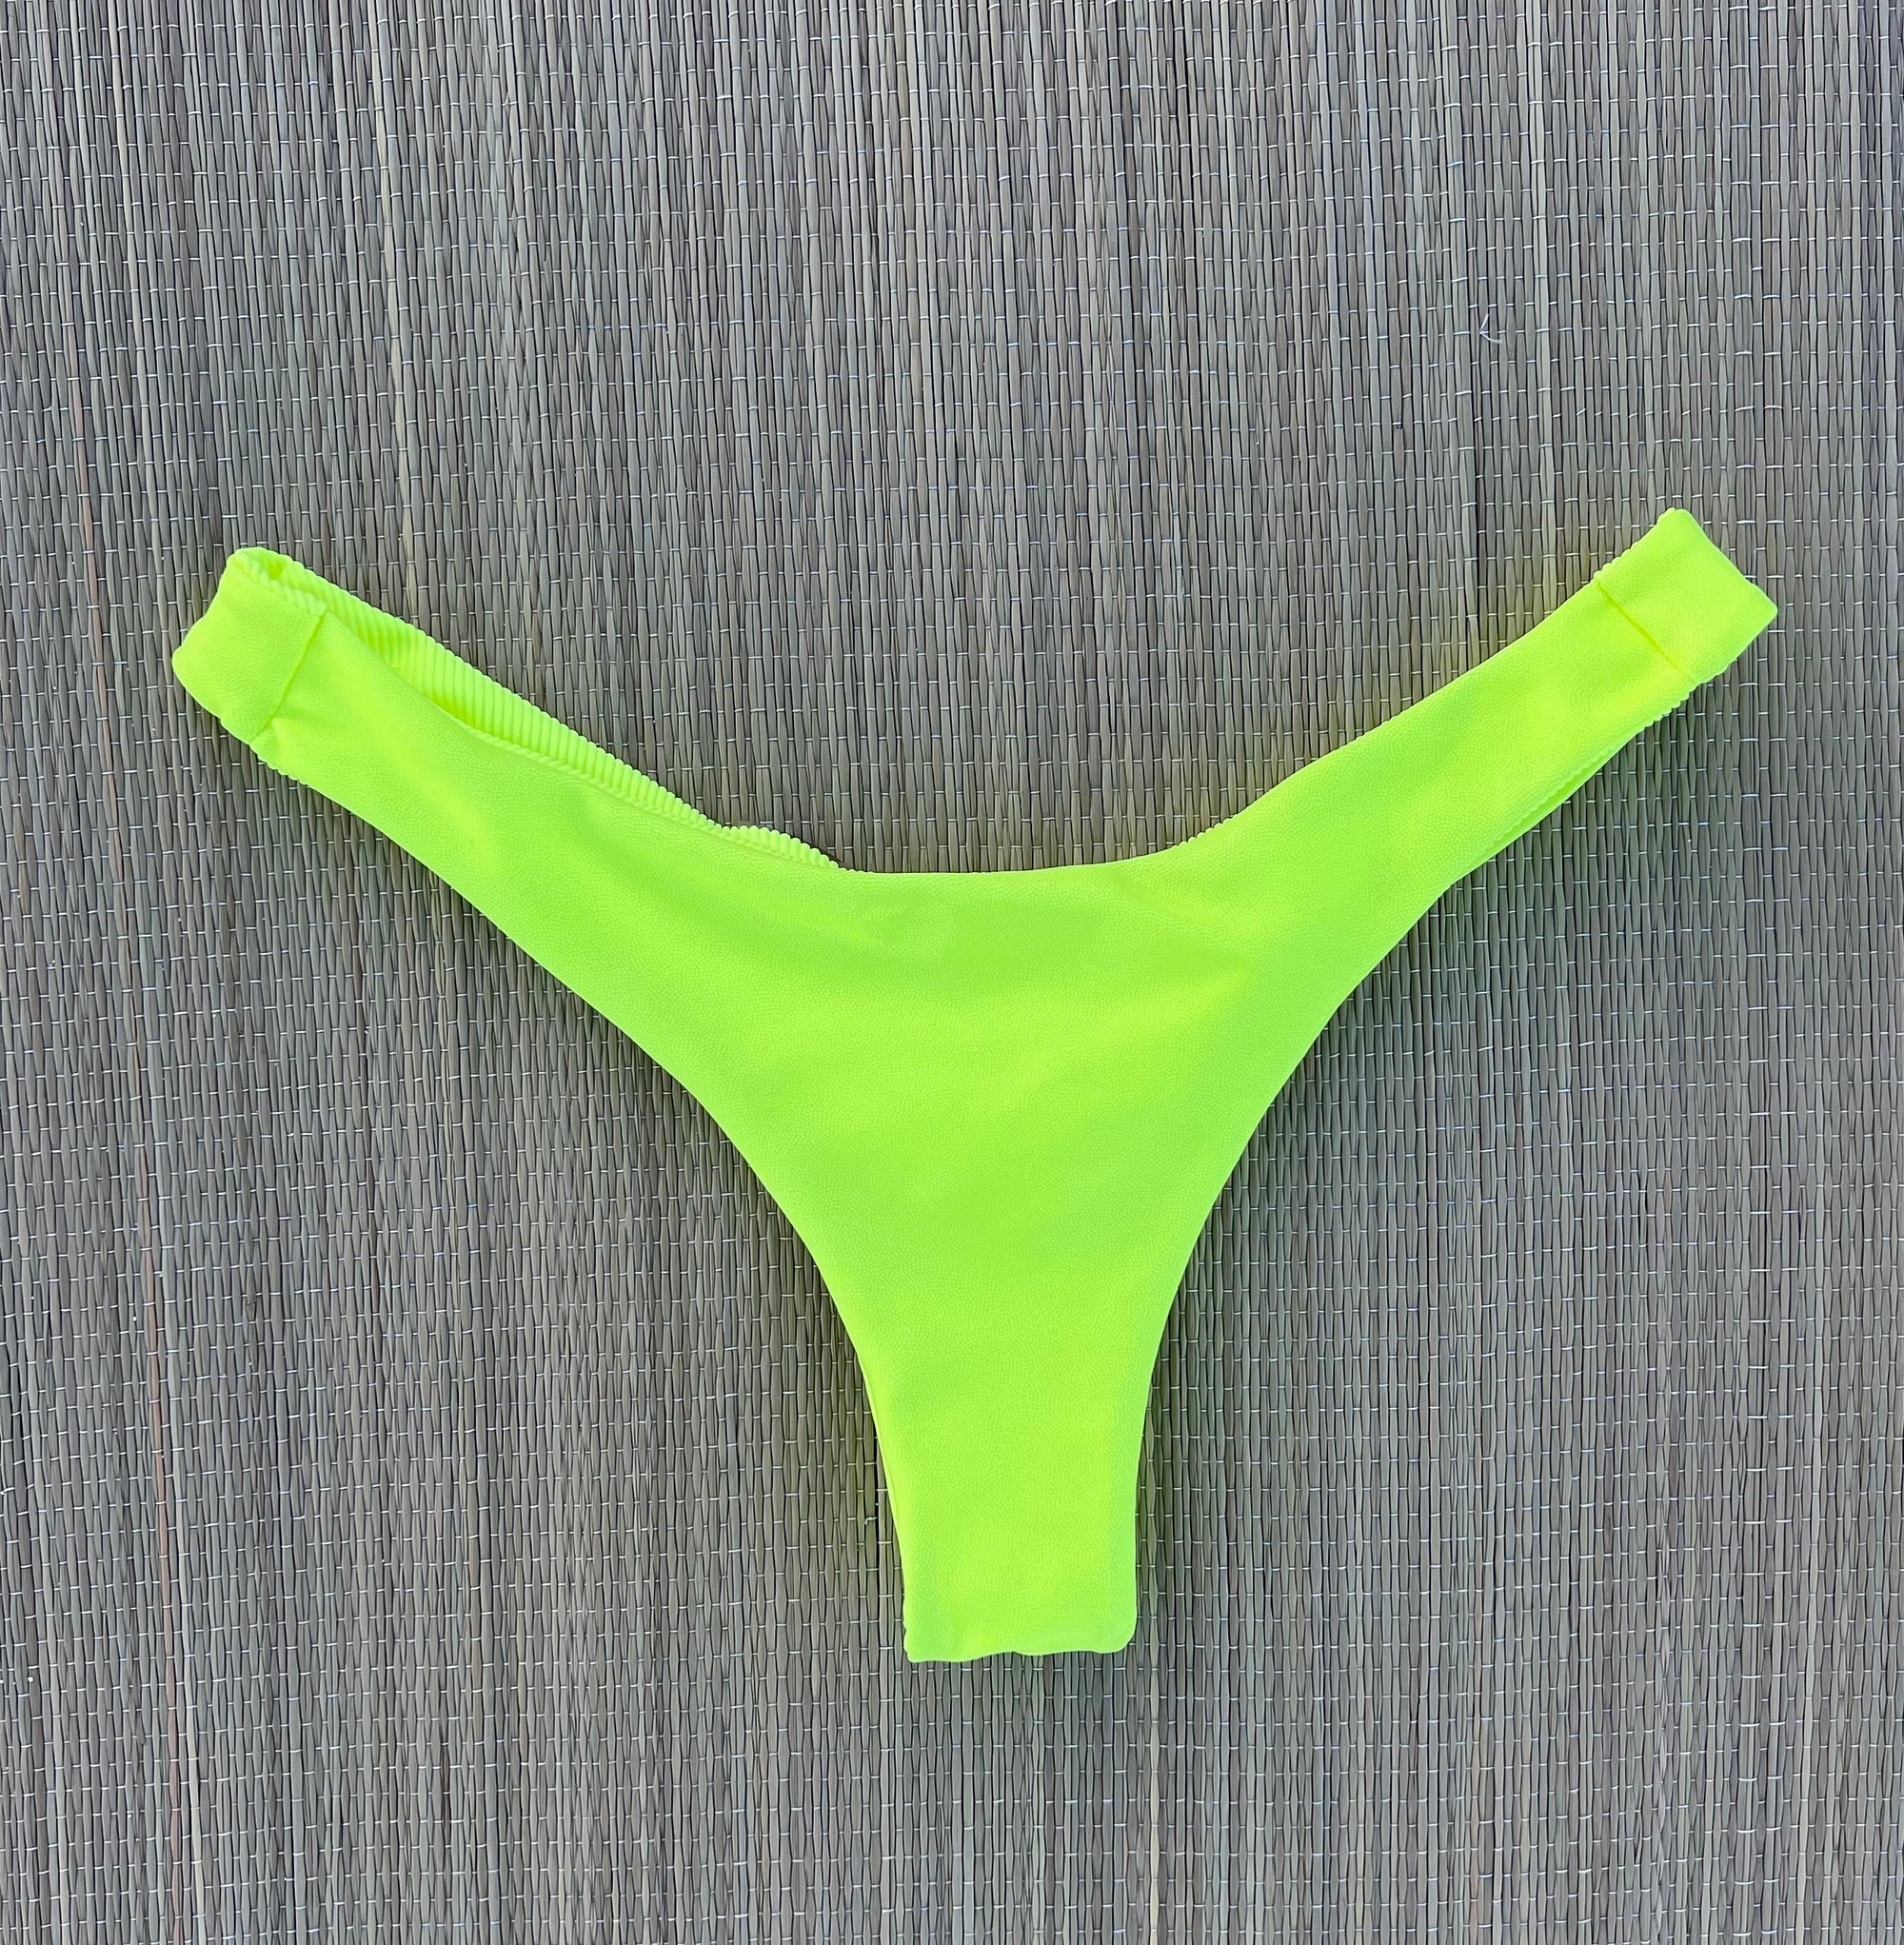 Electric Lemon Lime Itsy Super Cheeky Brazilian Thong Bikini Bottom